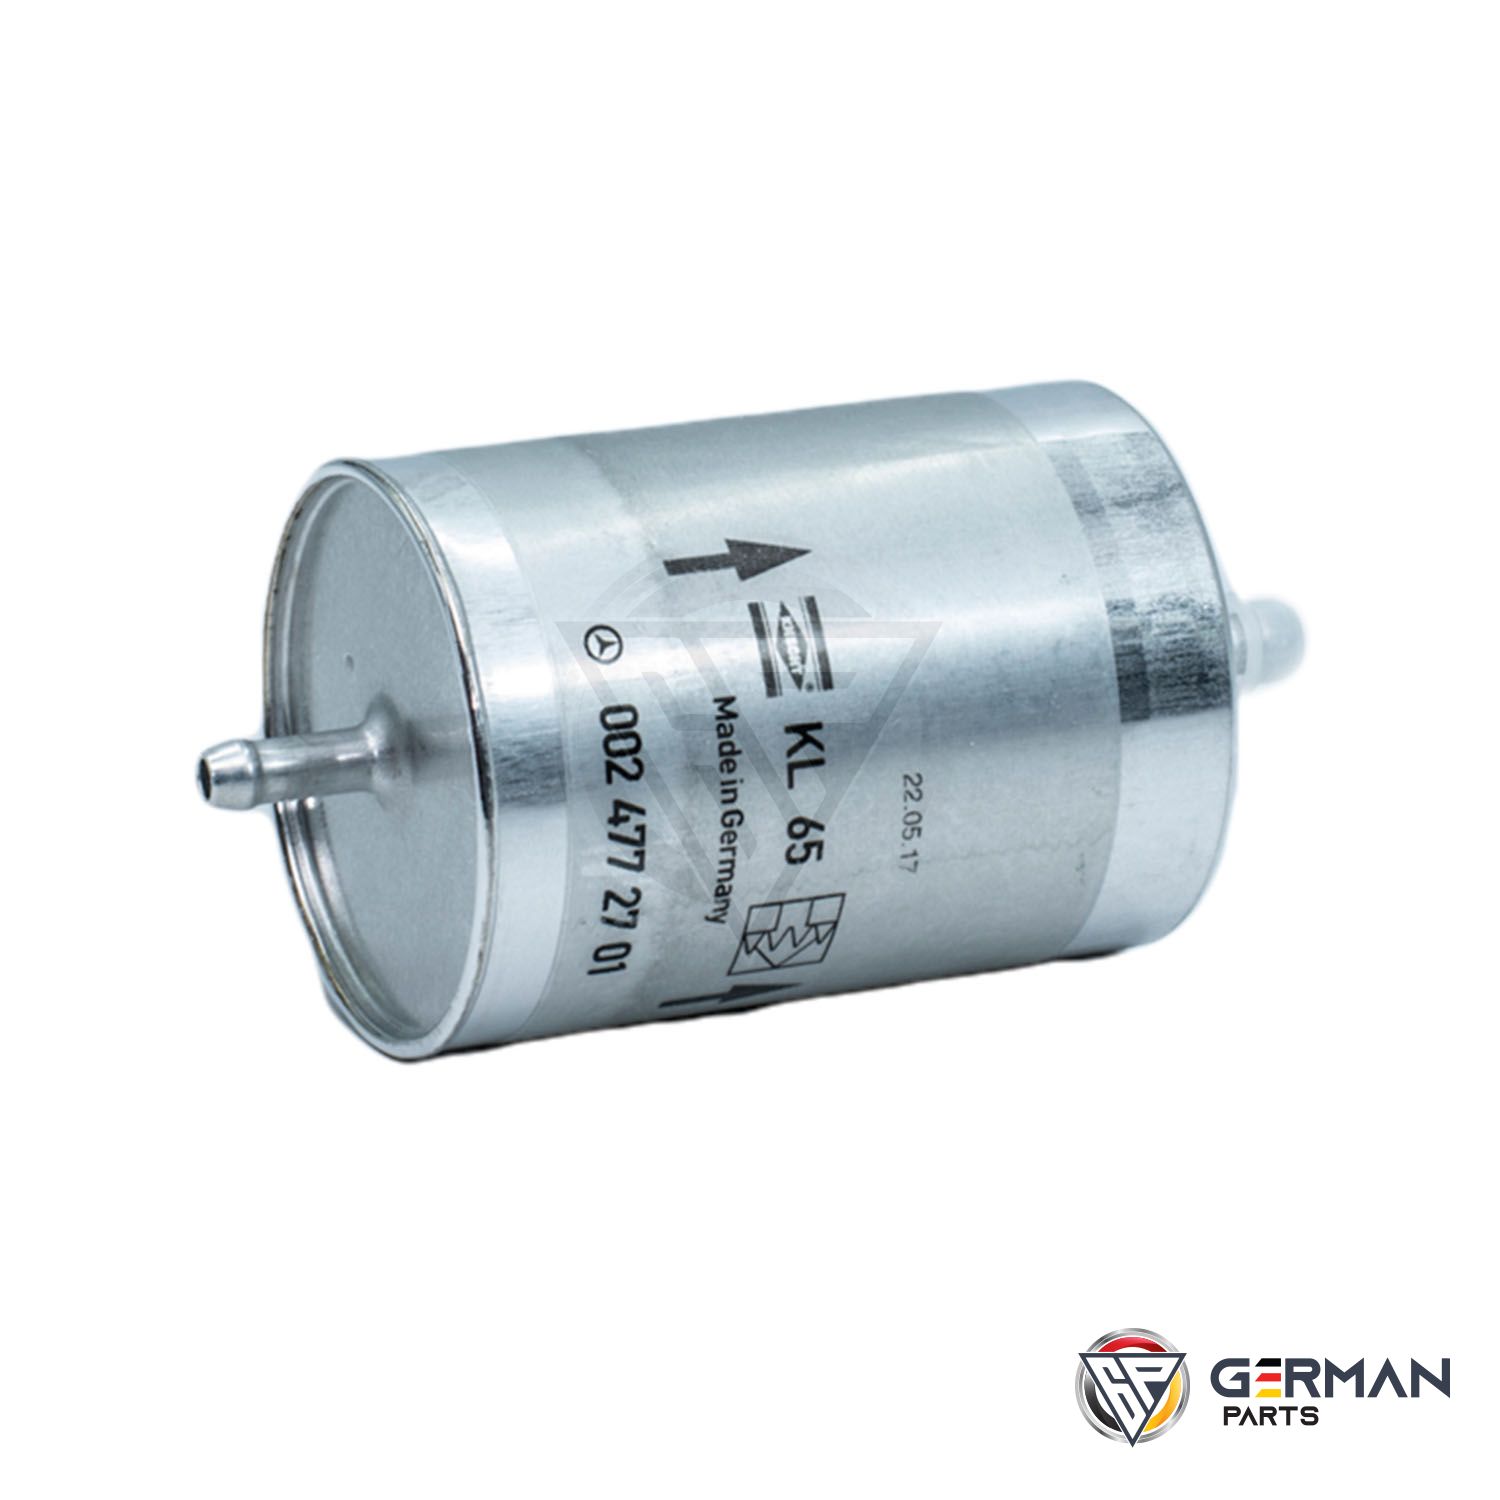 Buy Mercedes Benz Fuel Filter 0024772701 - German Parts